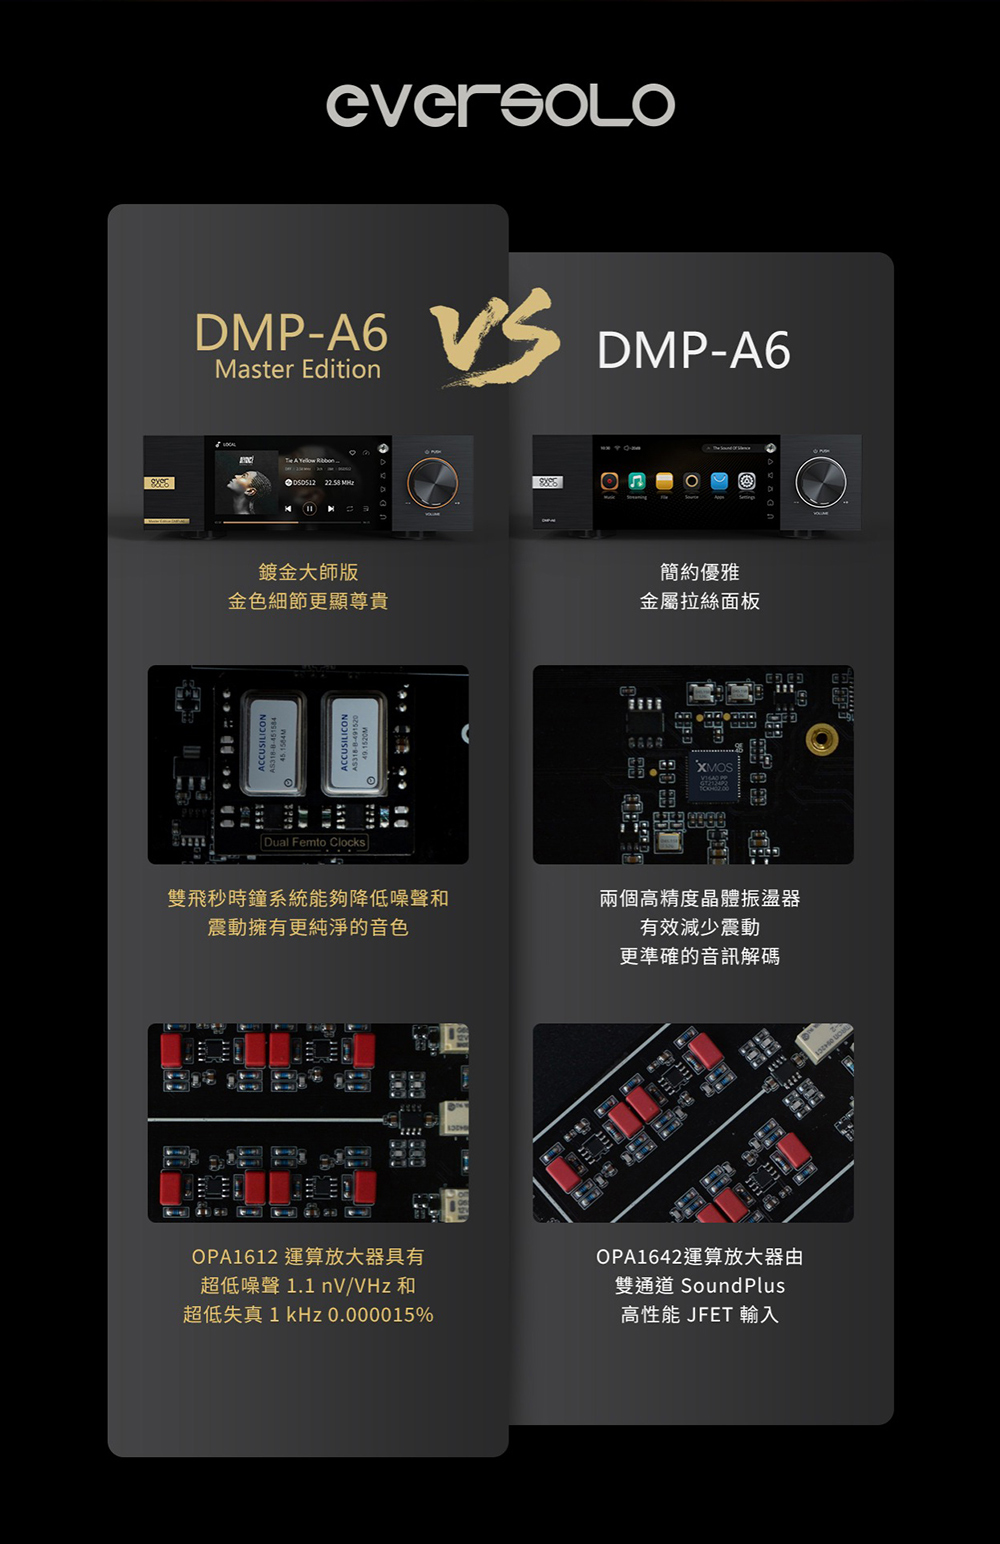 DMP-A6Master Edition 22.58 鍍金大師版金色細節更顯尊貴ACCUSILICONDual Femto Clocks雙飛秒時鐘系統能夠降低噪聲和震動擁有更純淨的音色DMP-A6簡約優雅金屬拉絲面板 XMOS 兩個高精度晶體振盪器有效減少震動更準確的音訊解碼OPA1612 運算放大器具有超低噪聲 1.1 nV/VHz 和超低失真 1 kHz 0.000015%OPA1642運算放大器由雙通道 SoundPlus高性能 JFET 輸入